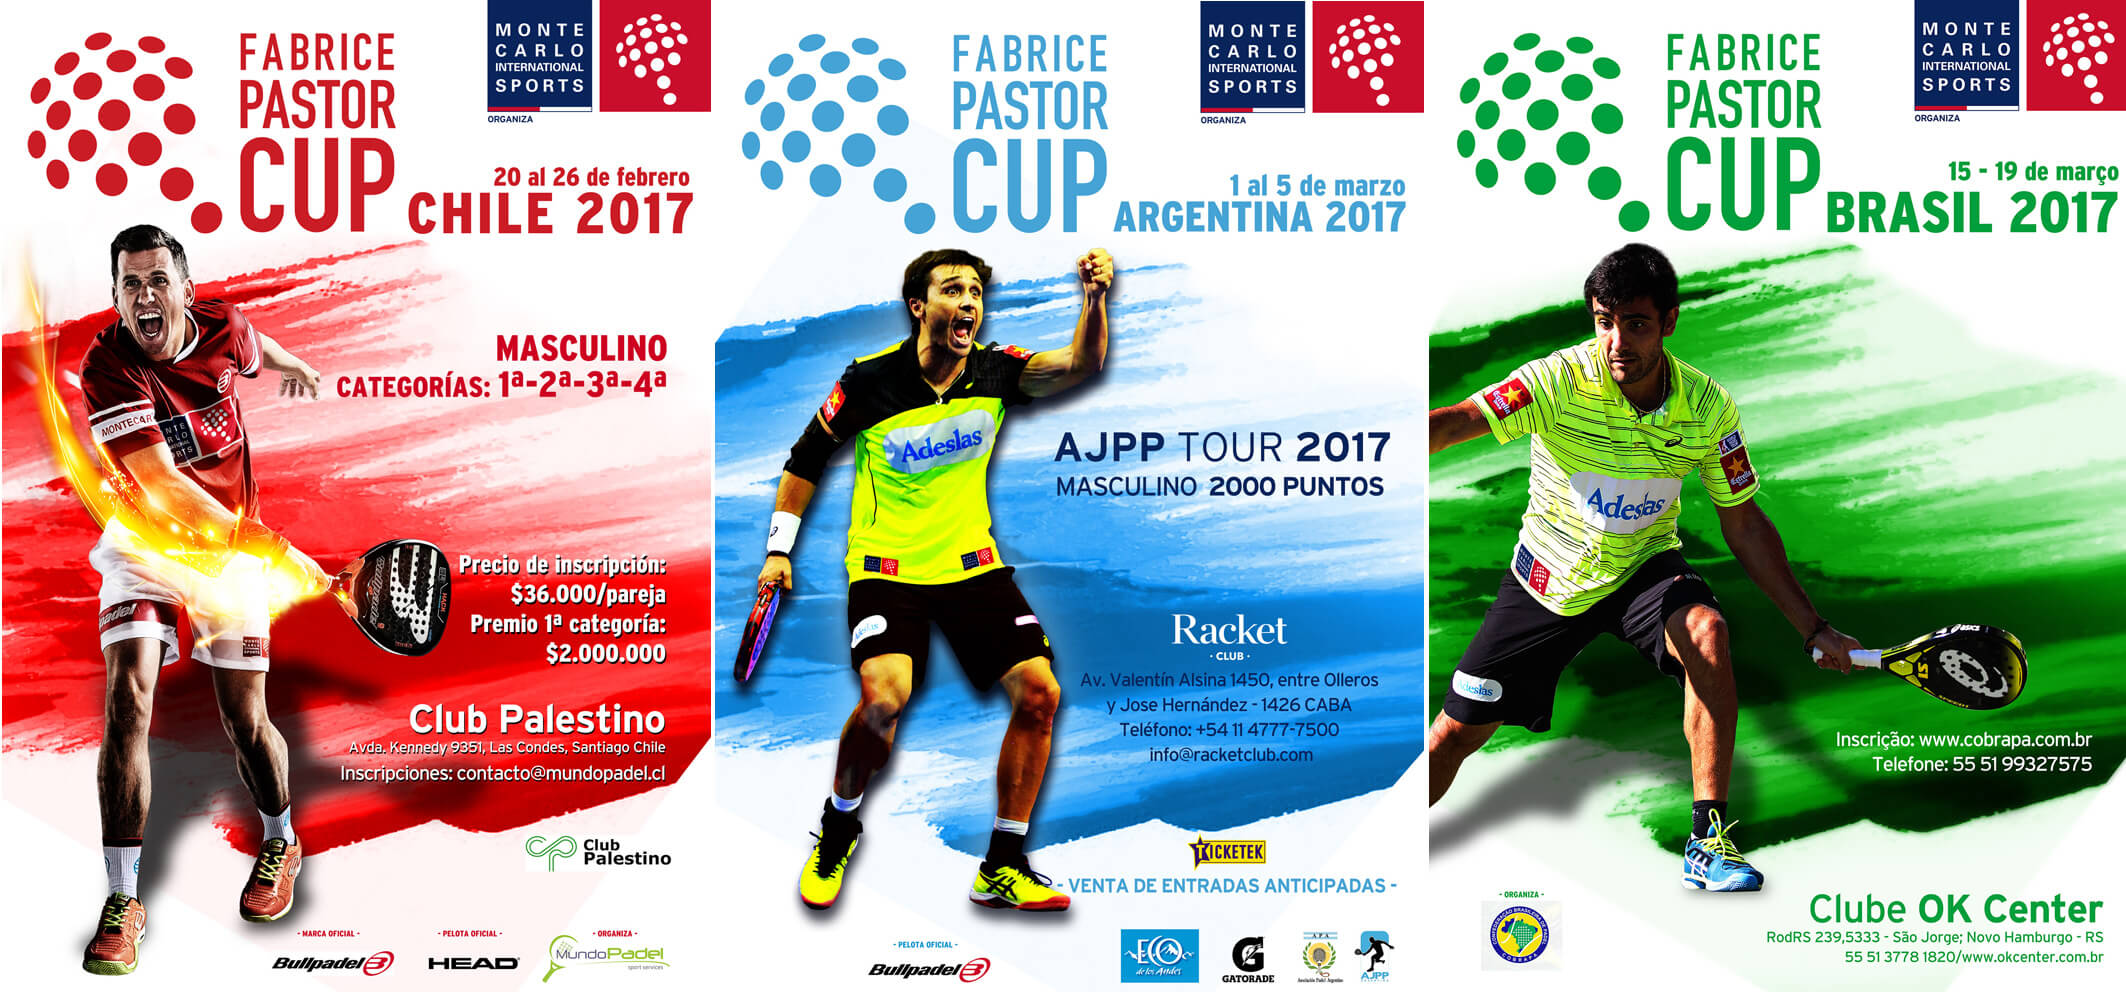 Fabrice Pastor Cup i Chile, Argentina och Brasilien